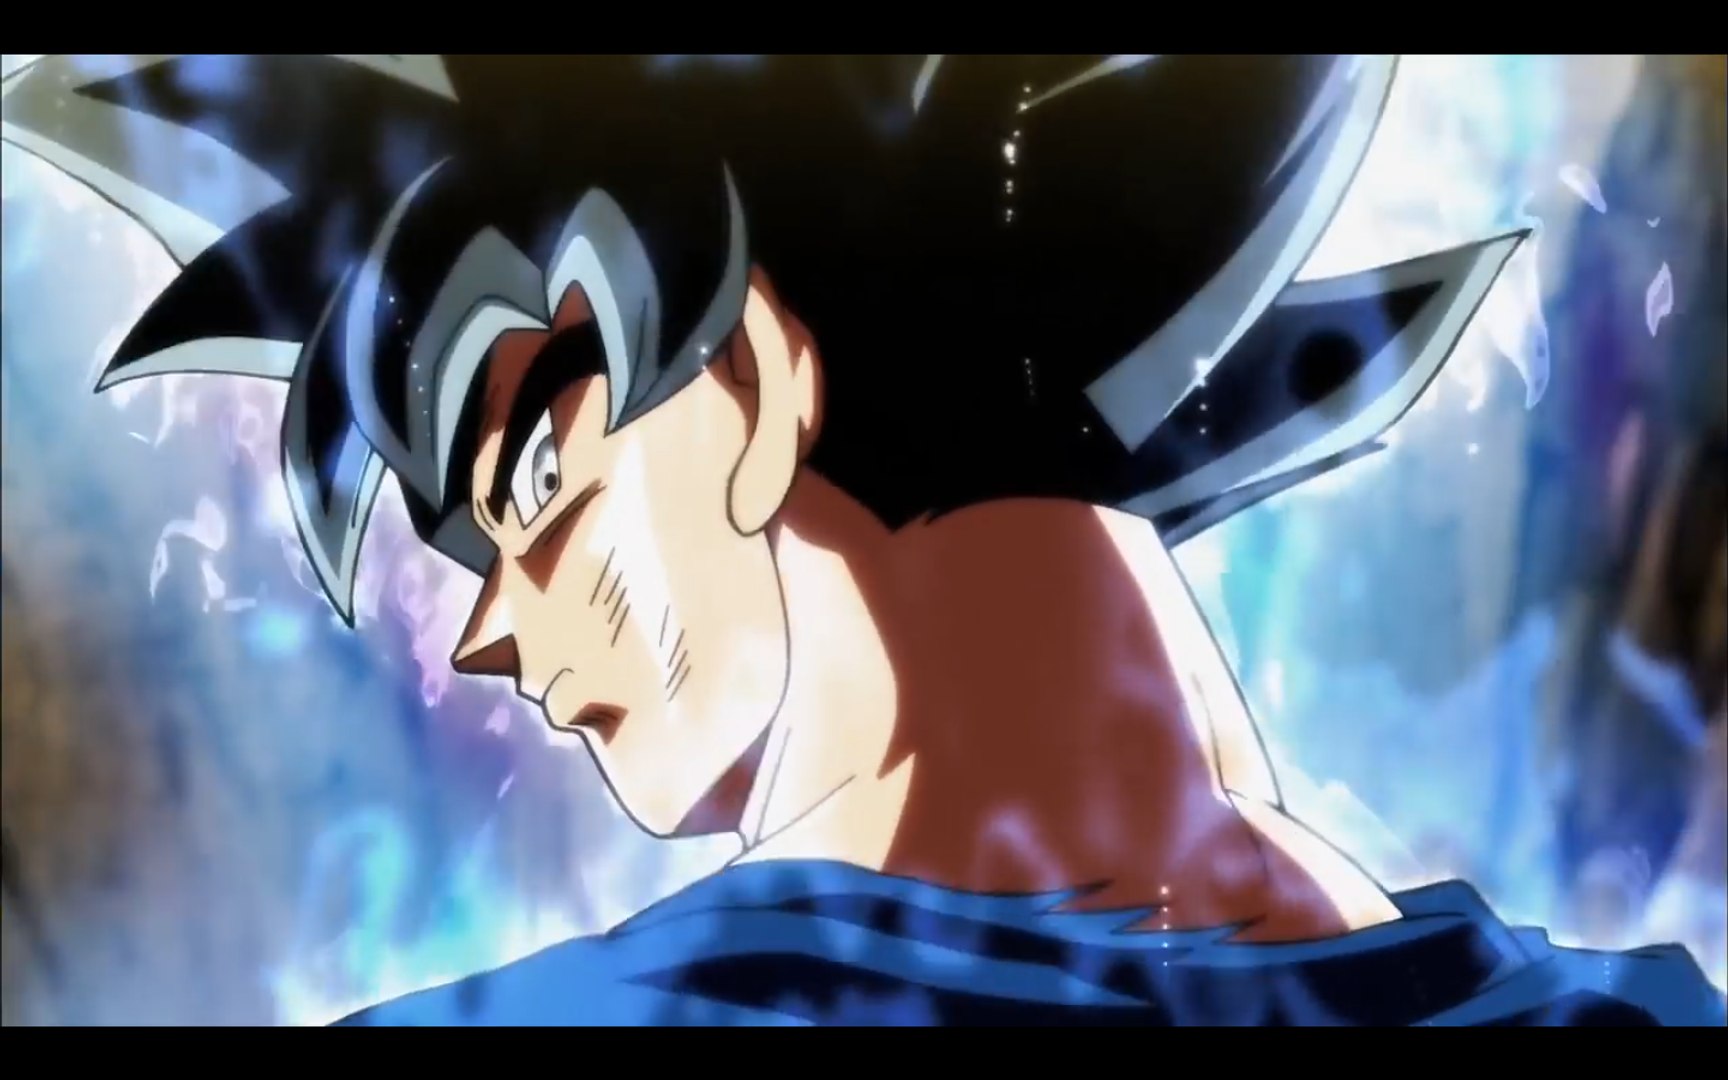 Goku Ultra Instinct Form - Dragon Ball Super Episode 110 - video Dailymotion